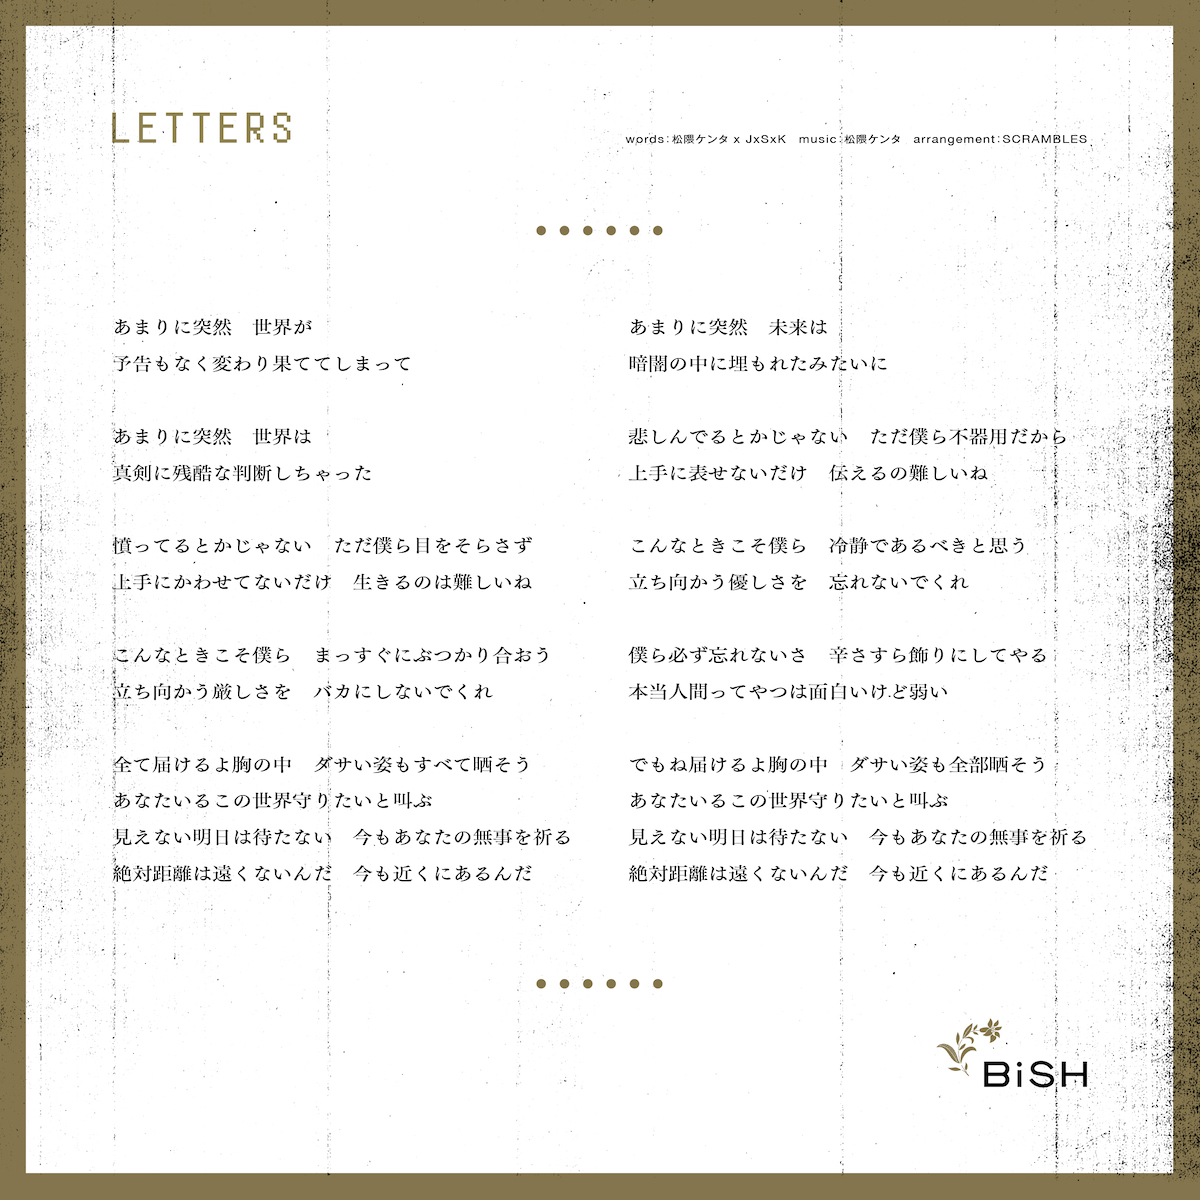 Bish メジャー3 5thアルバム Letters トラックリスト リード曲の歌詞画像公開 News Ototoy